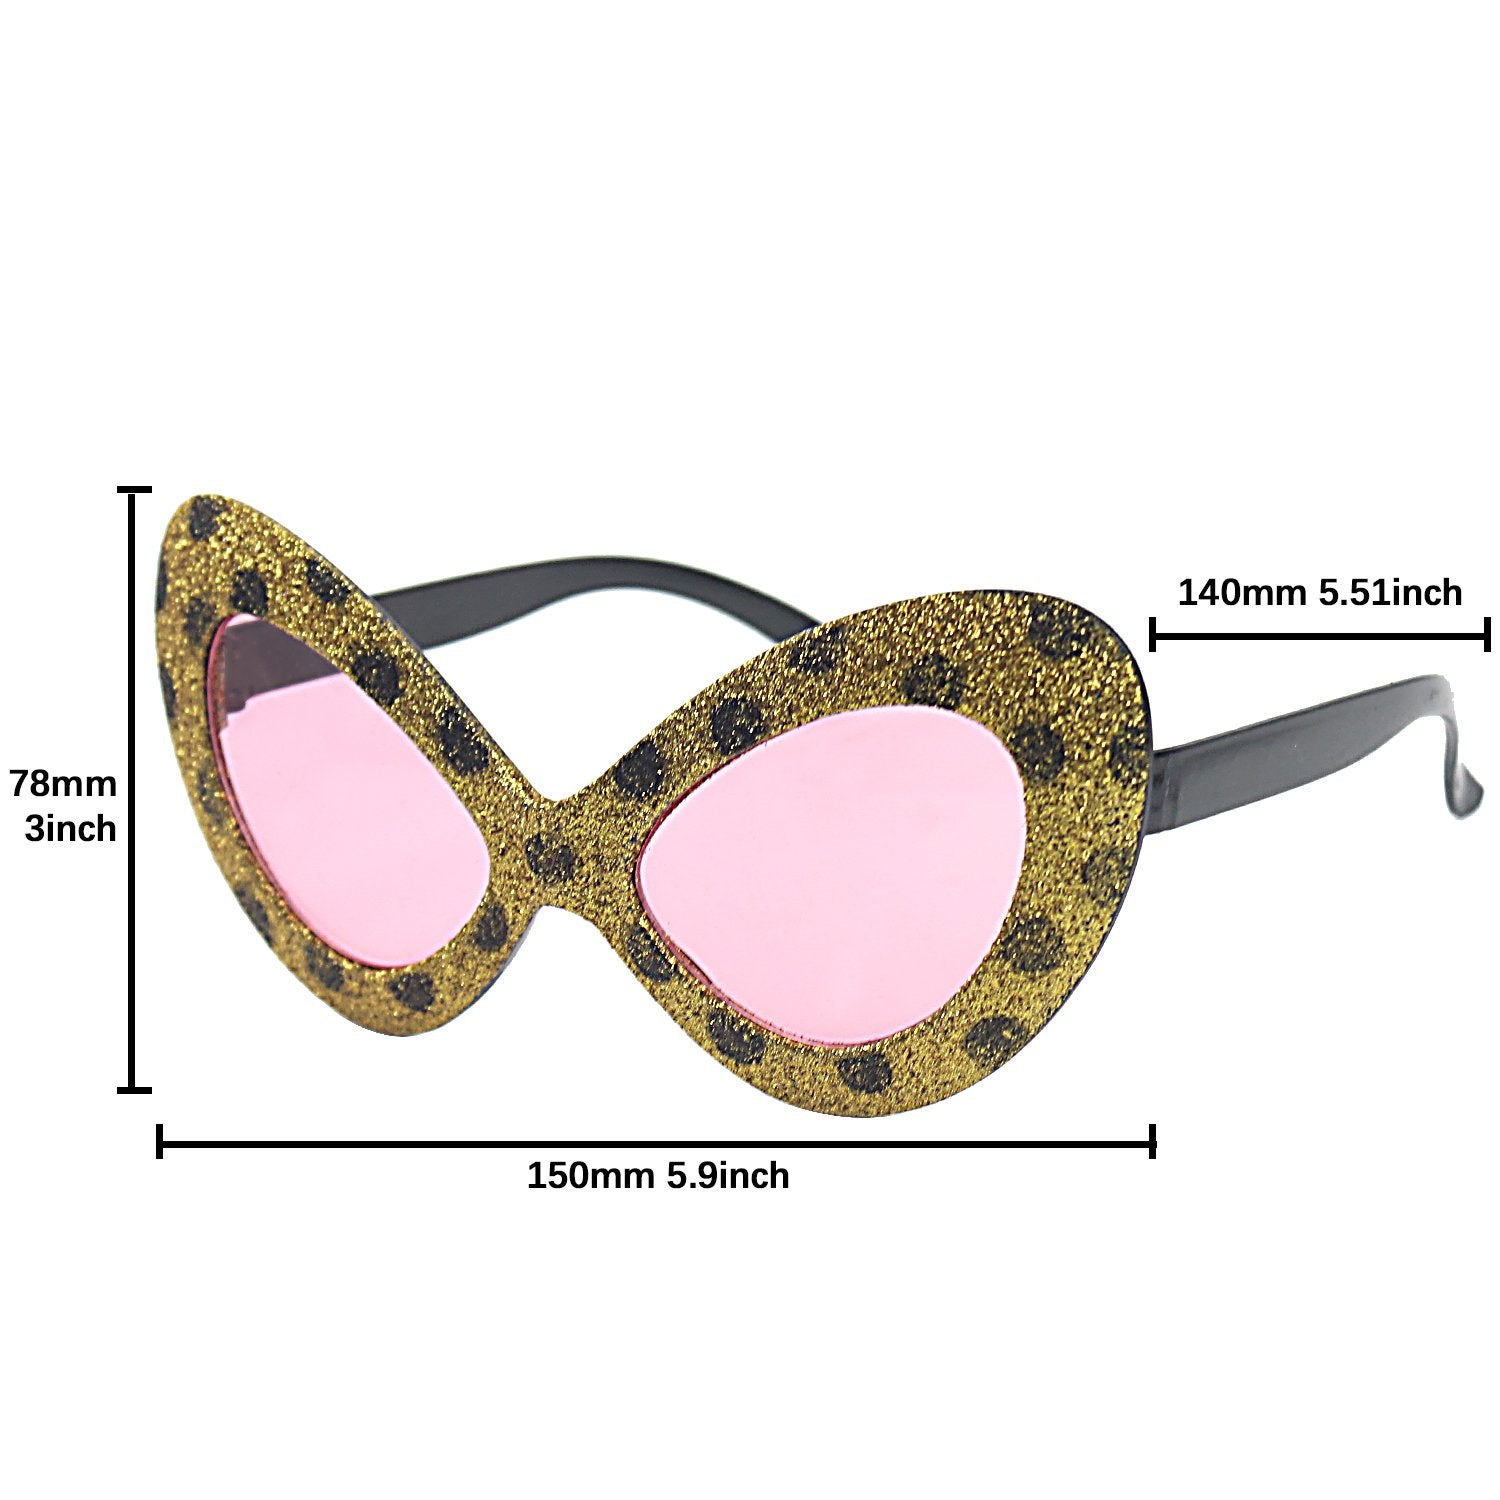 Glam Leopard Spots Cat-eye Party Costume Sunglasses Fun Shades